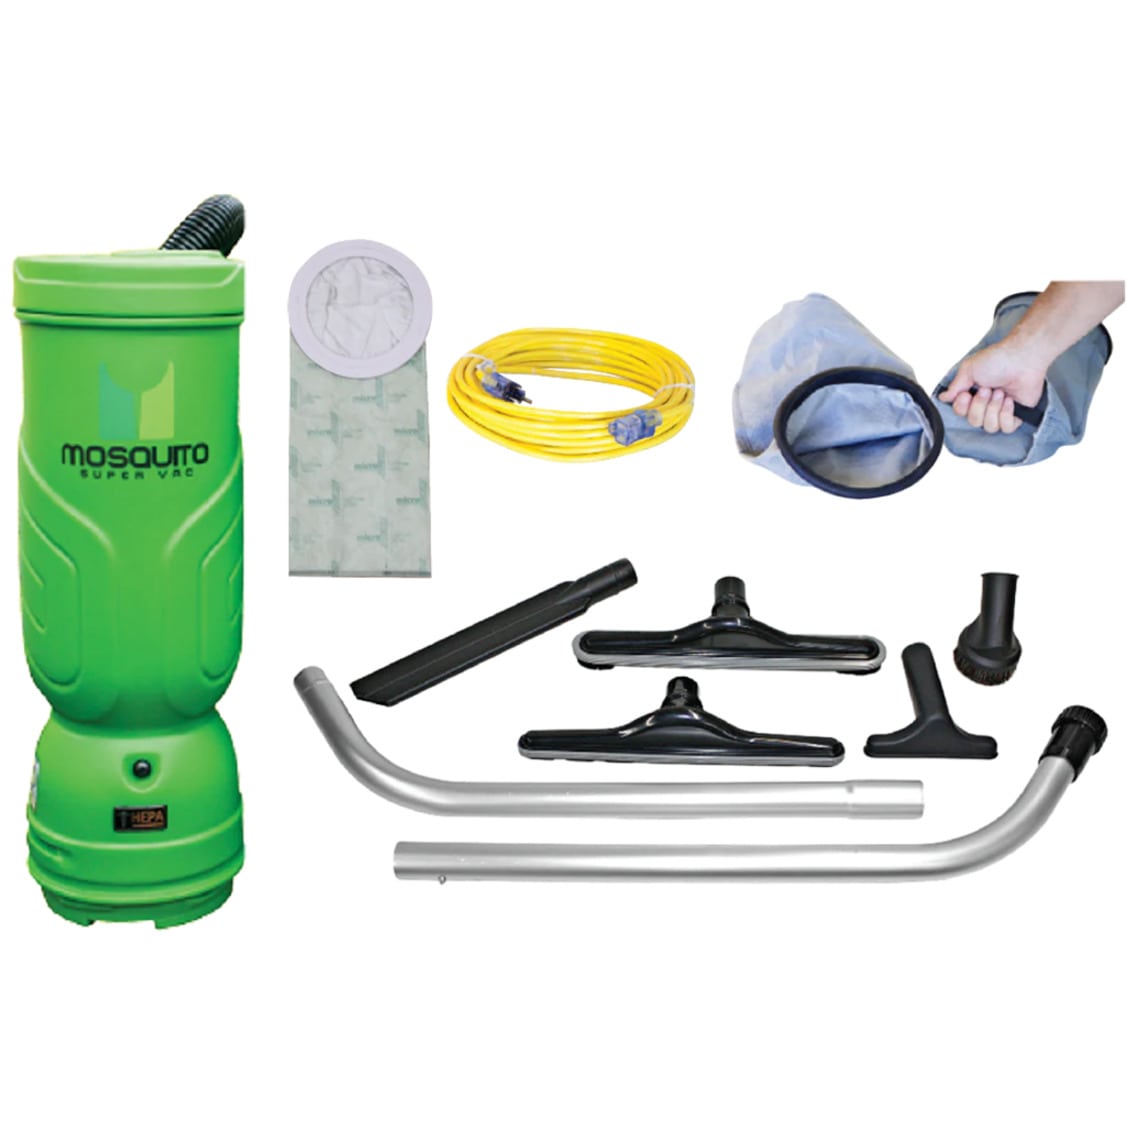 06-1062-SW Mosquito Backpack Vacuums Sidewinder Tool Kit, Ergonomic, GREEN